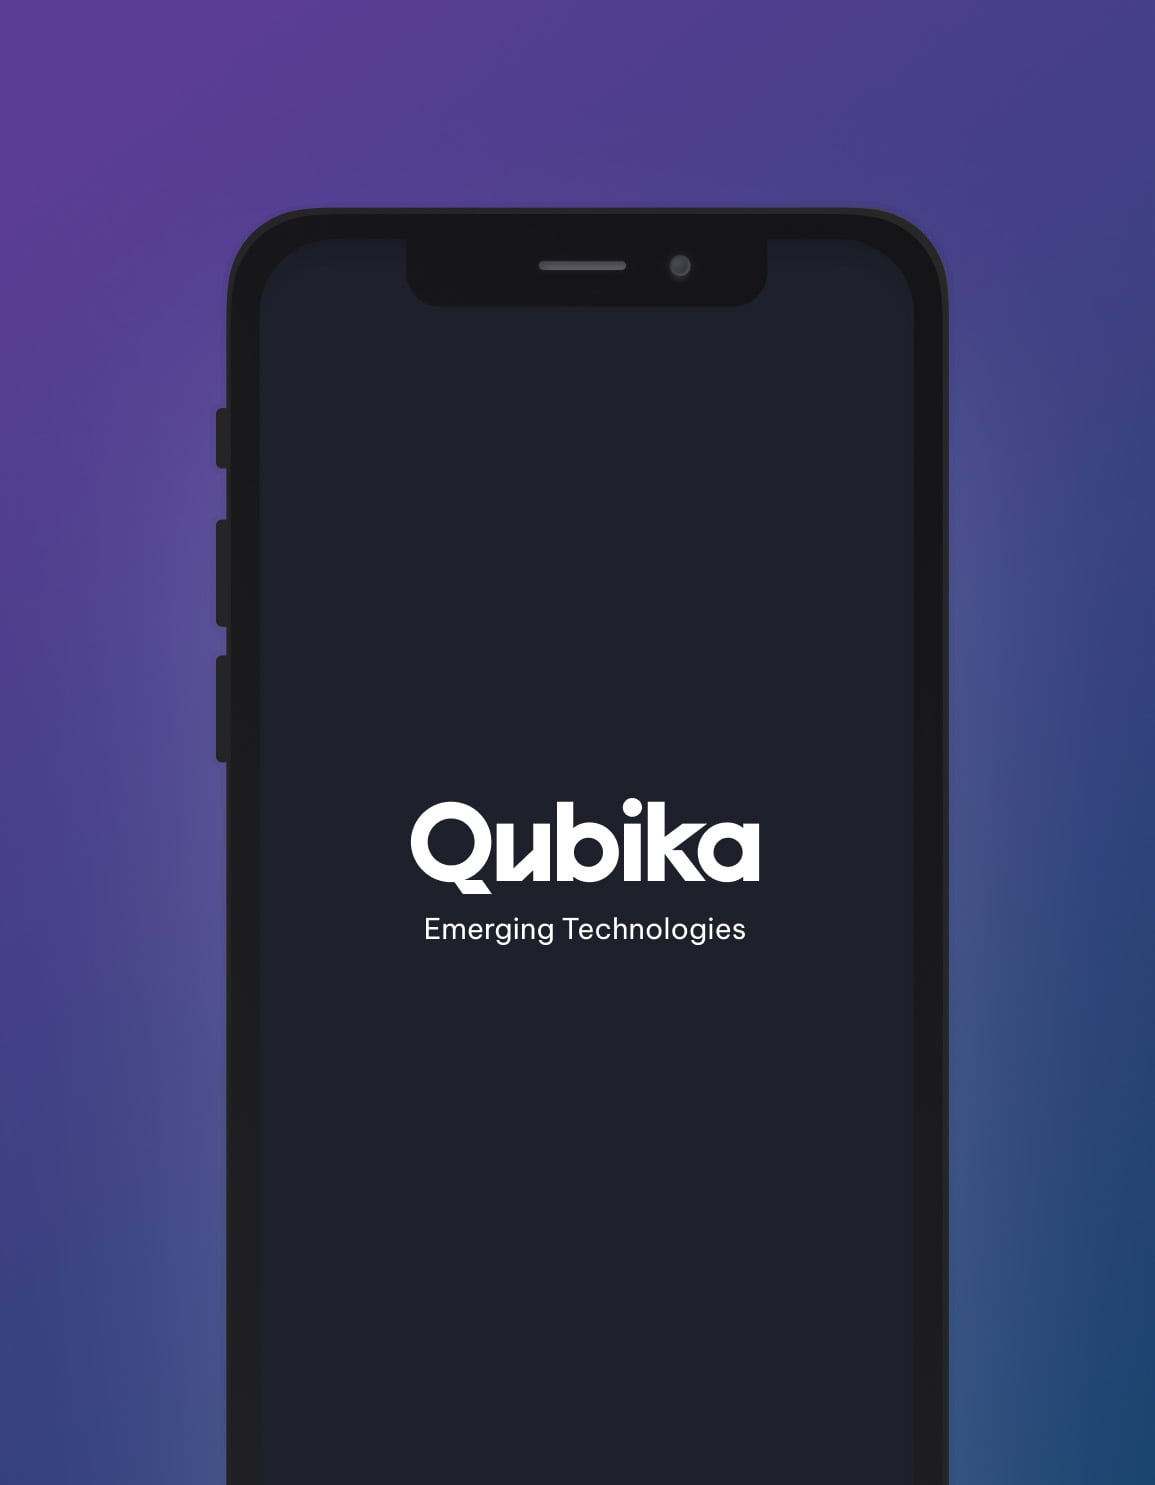 Qubika logo in a mobile application